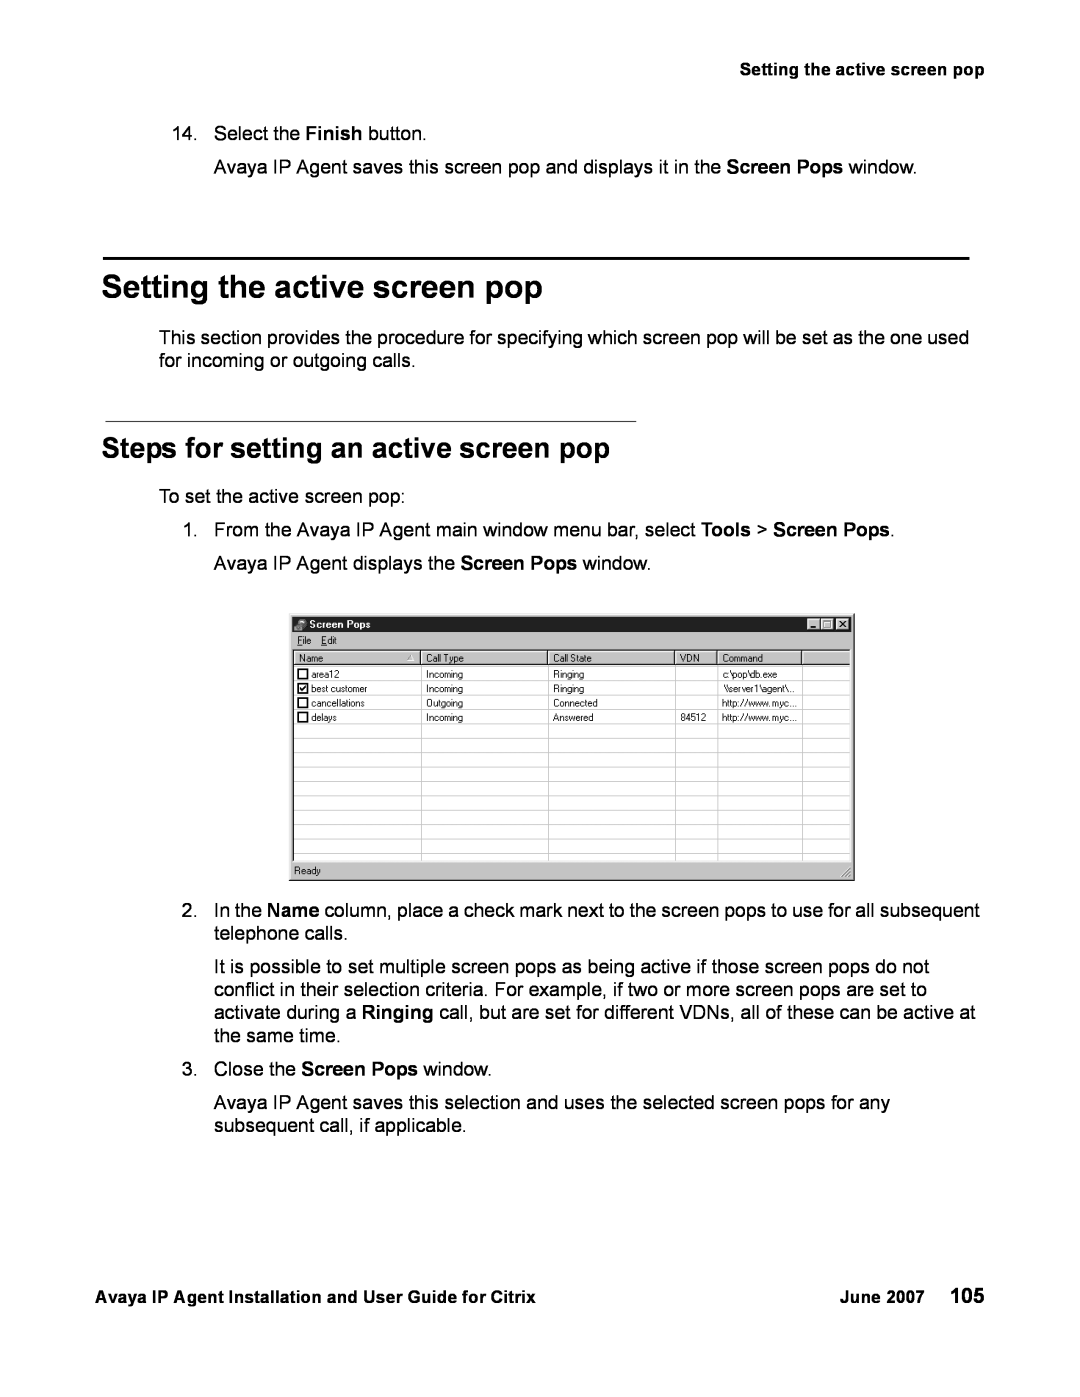 Avaya 7 manual Setting the active screen pop, Steps for setting an active screen pop 